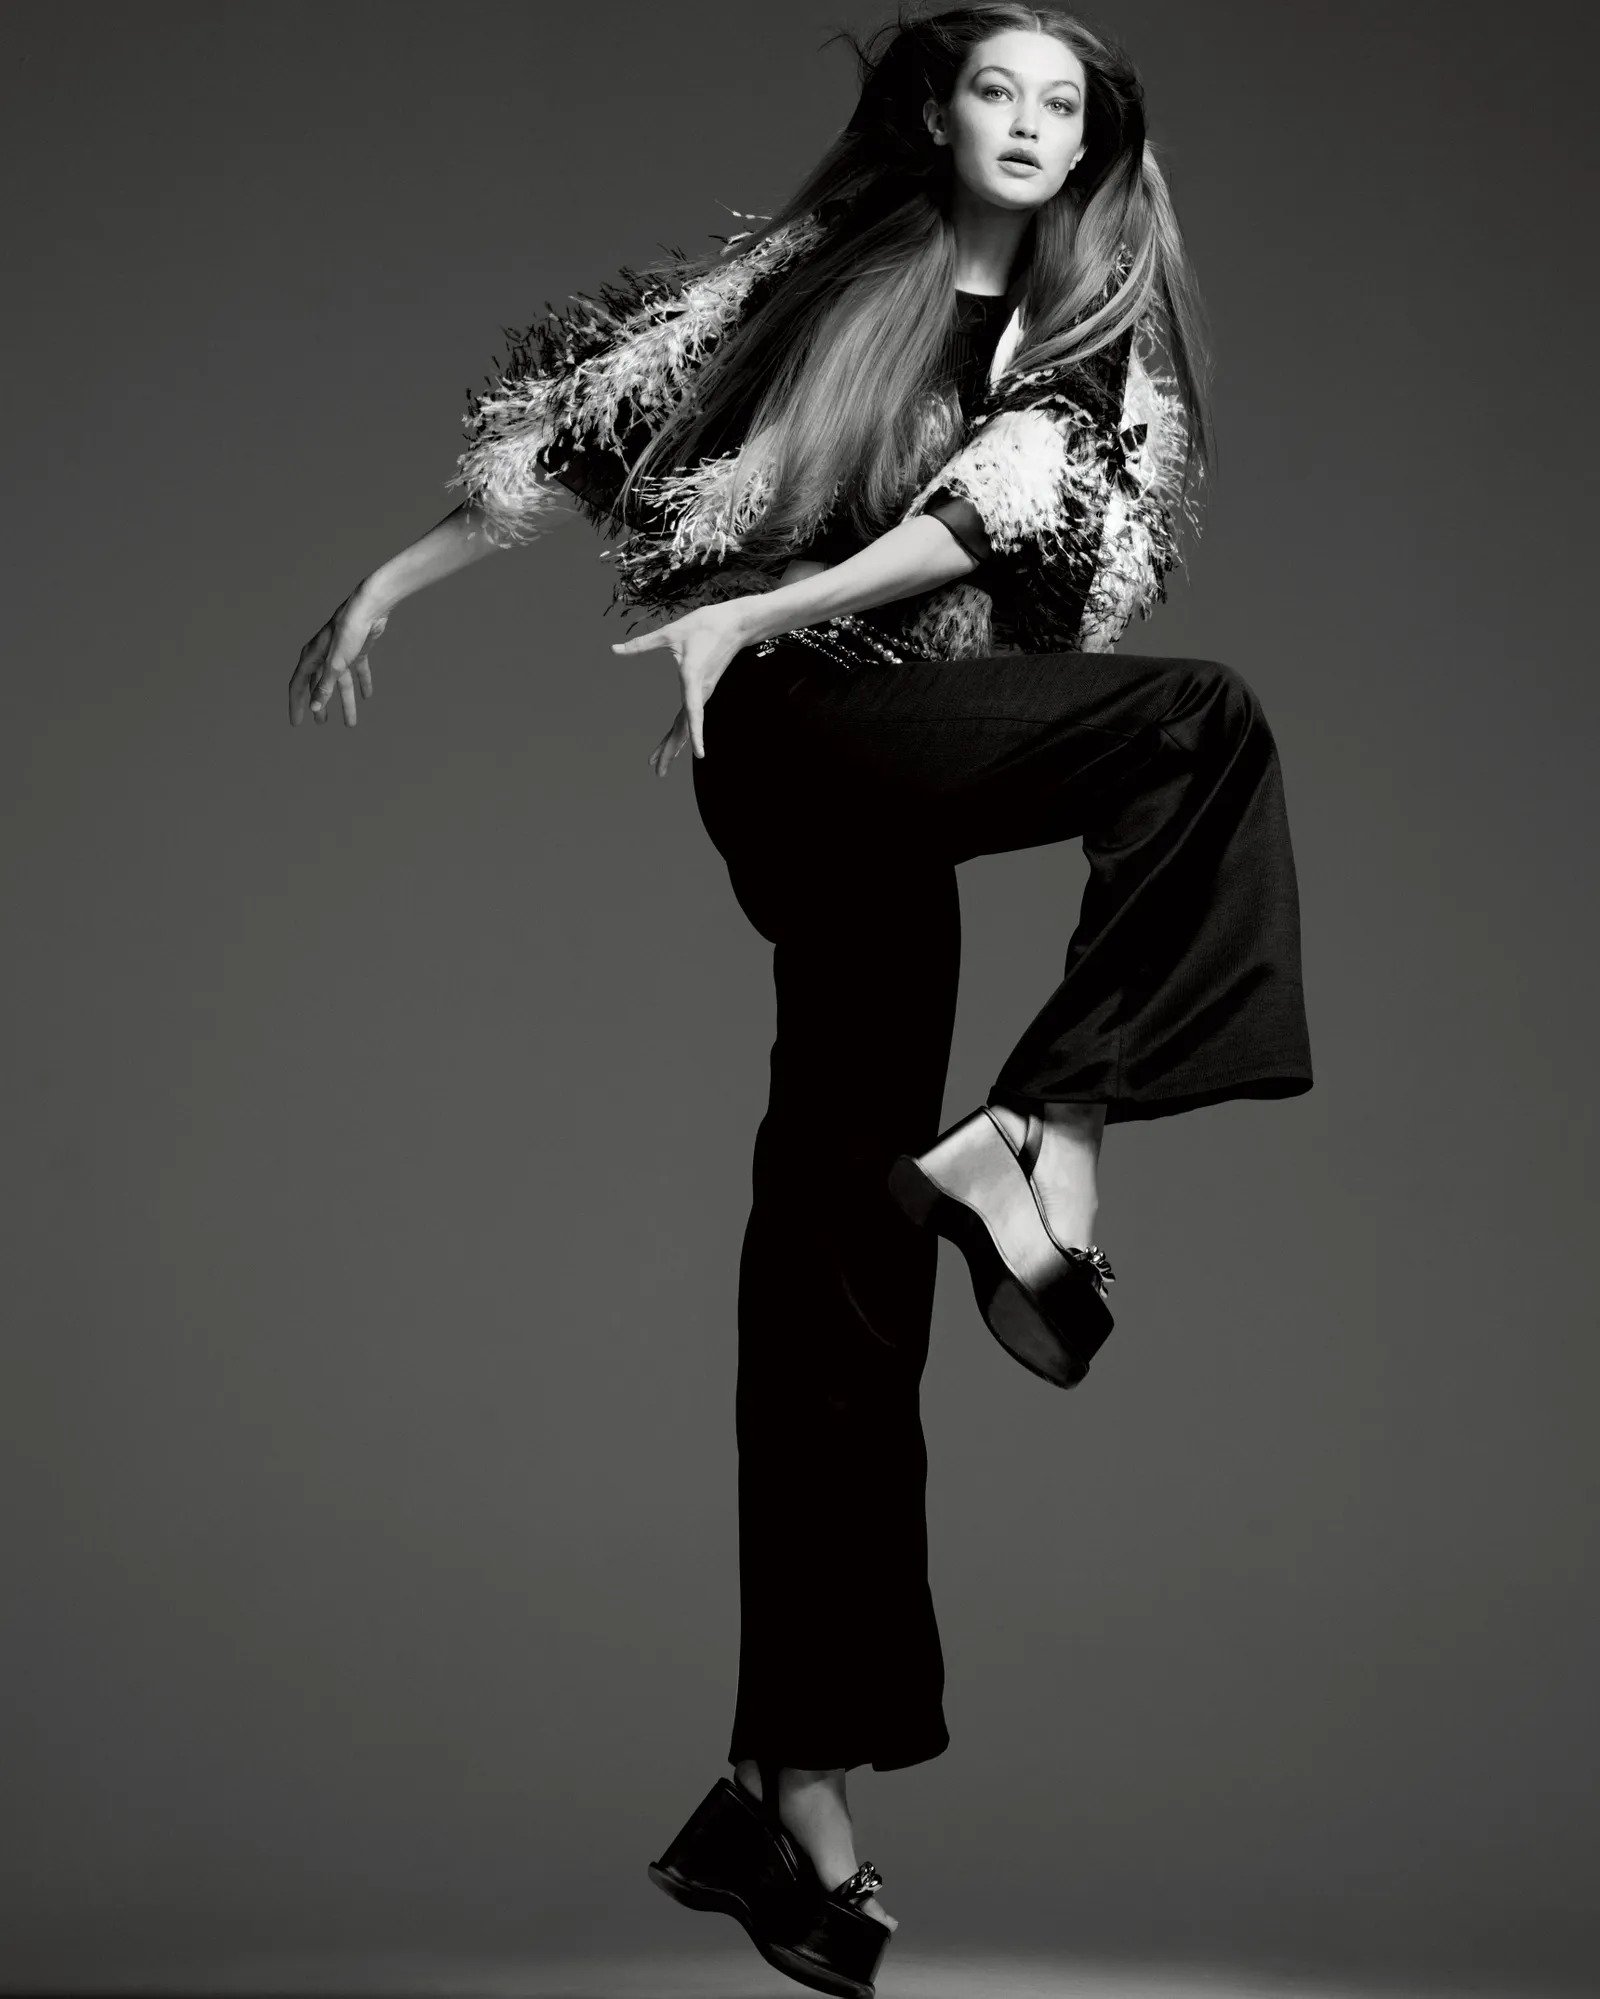 Fotos n°6 : Gigi Hadid est de vuelta en Vogue!